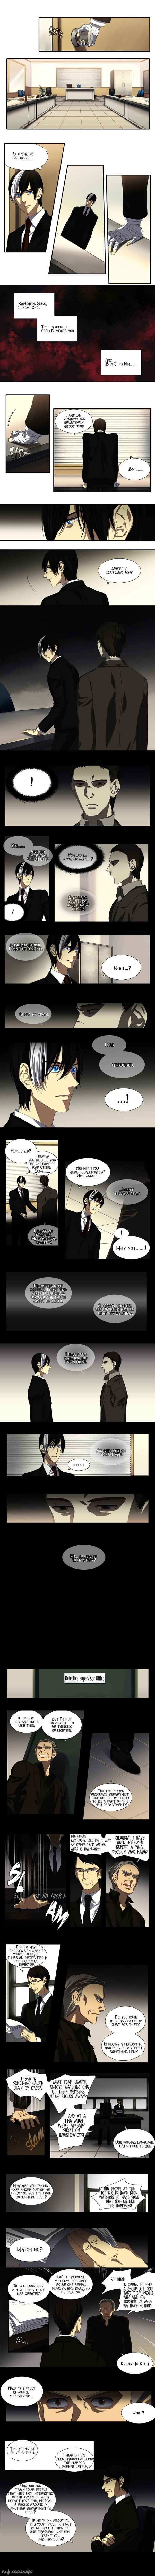 Supernatural Investigation Department - Page 2